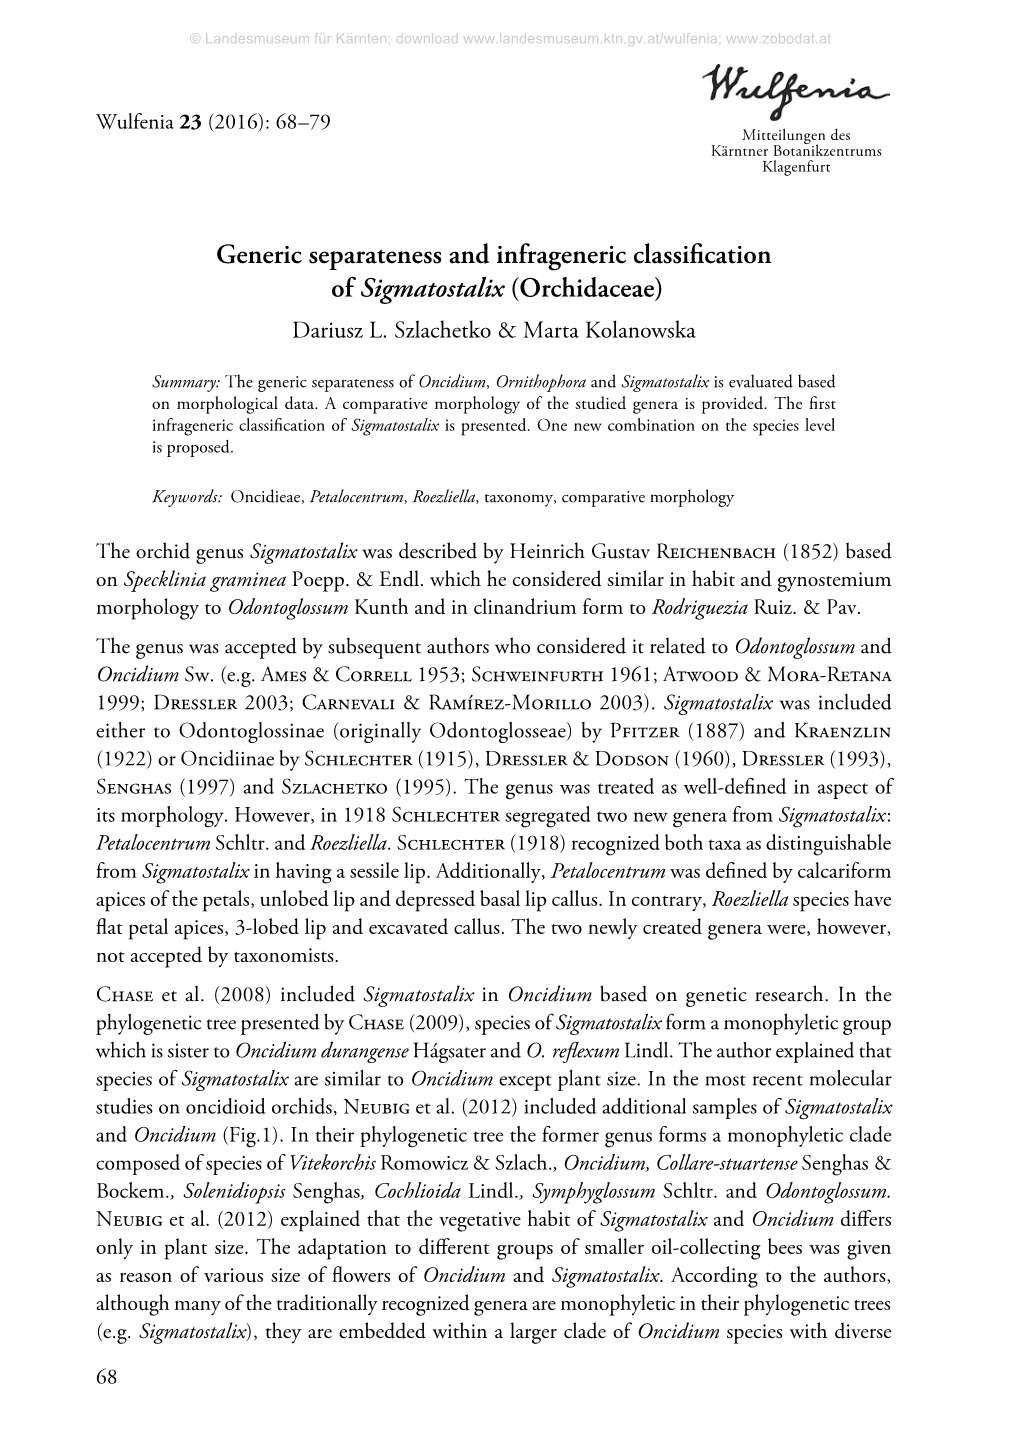 Generic Separateness and Infrageneric Classification of Sigmatostalix (Orchidaceae) Dariusz L